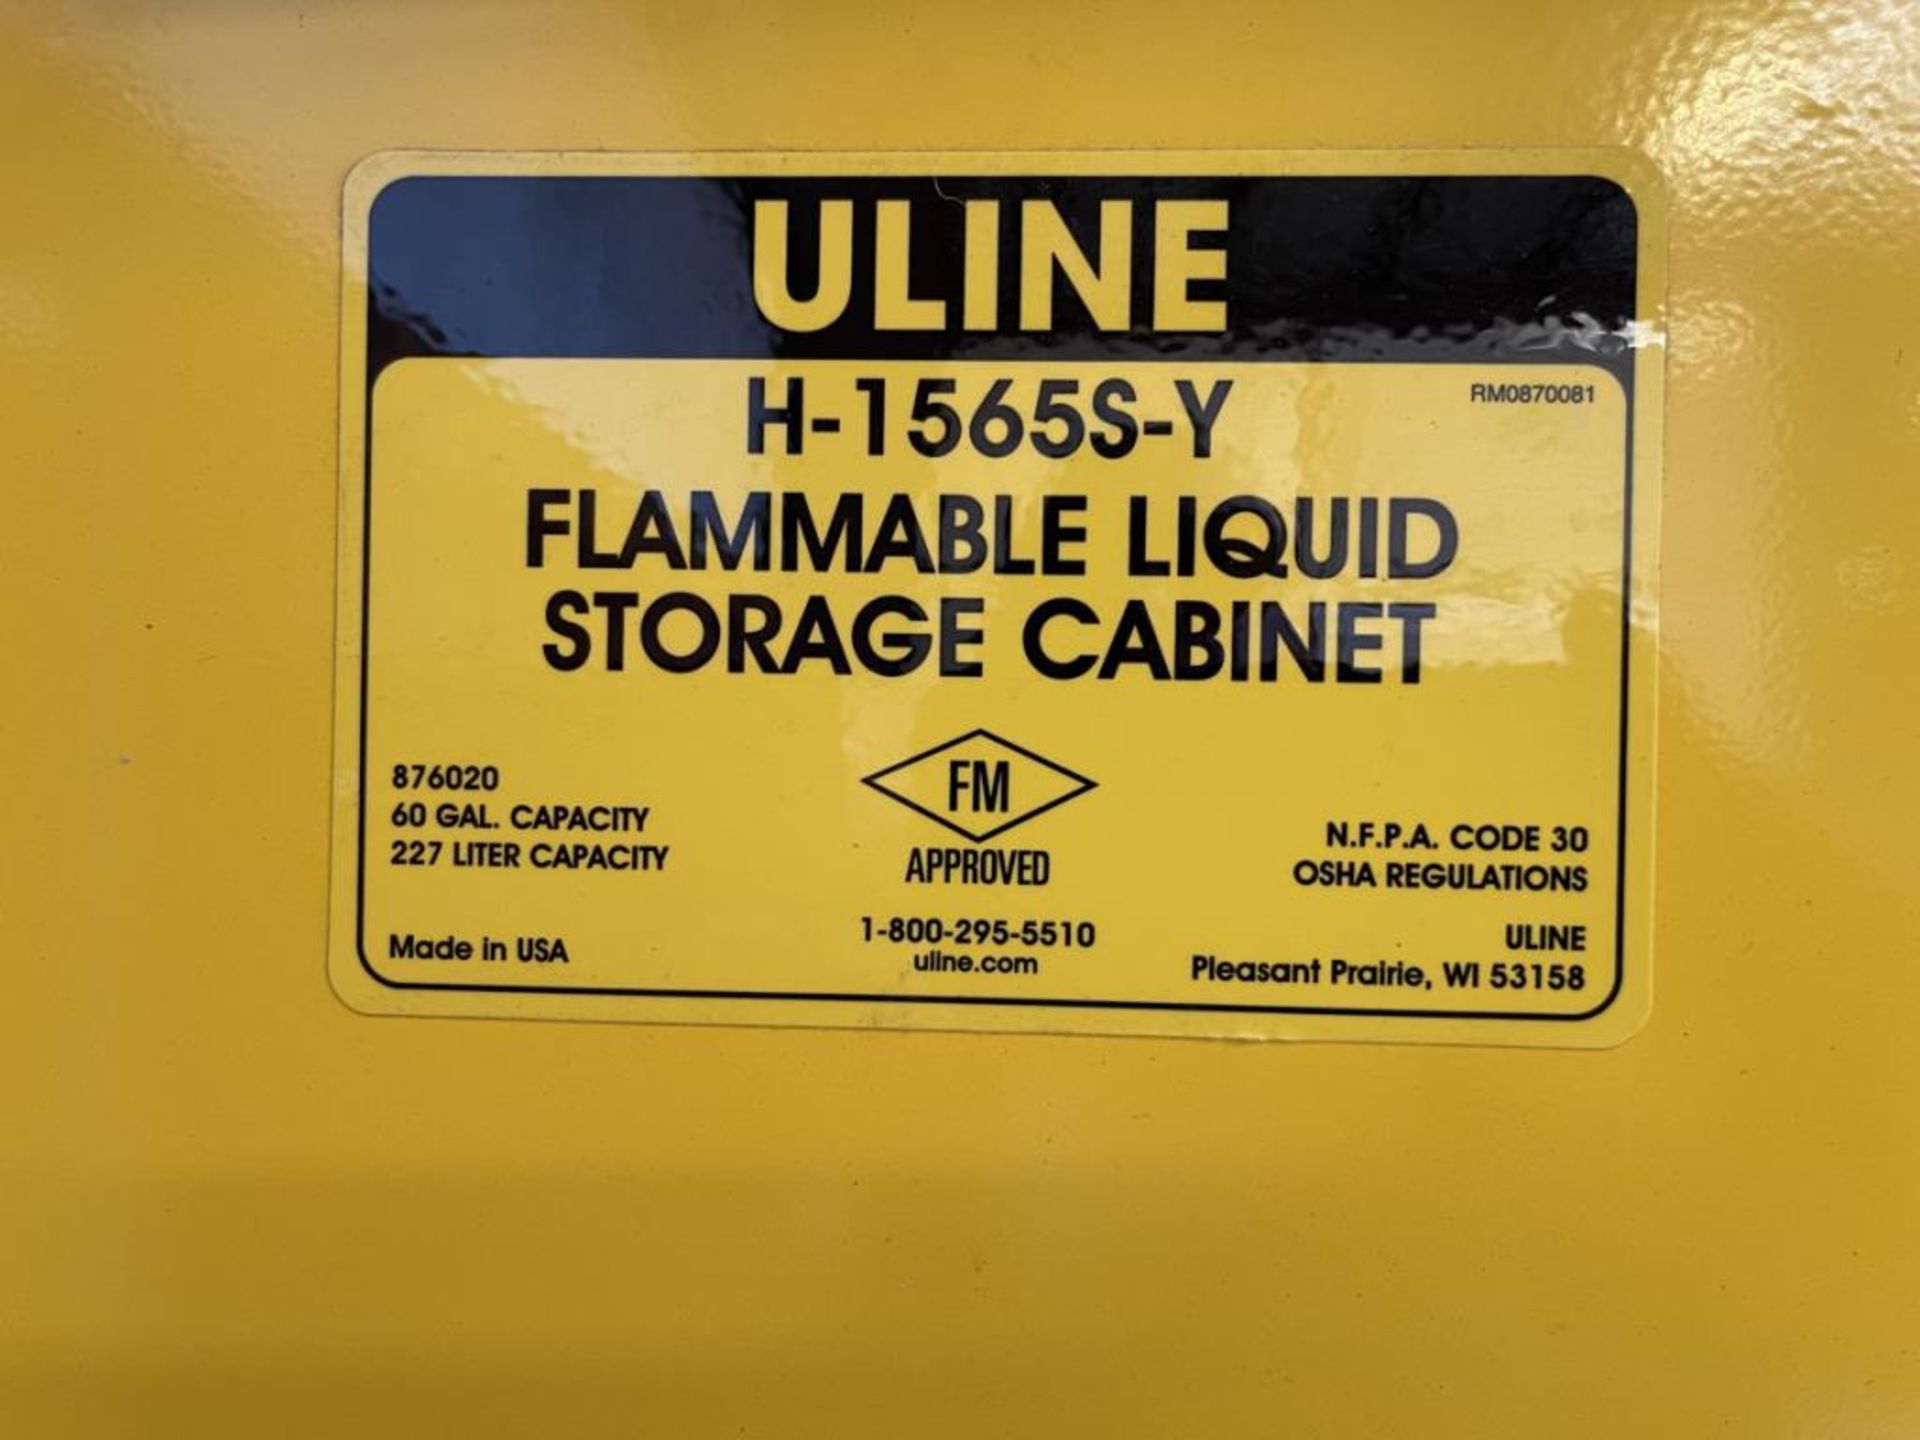 Uline Flammable Liquid Storage Cabinet - Image 2 of 2